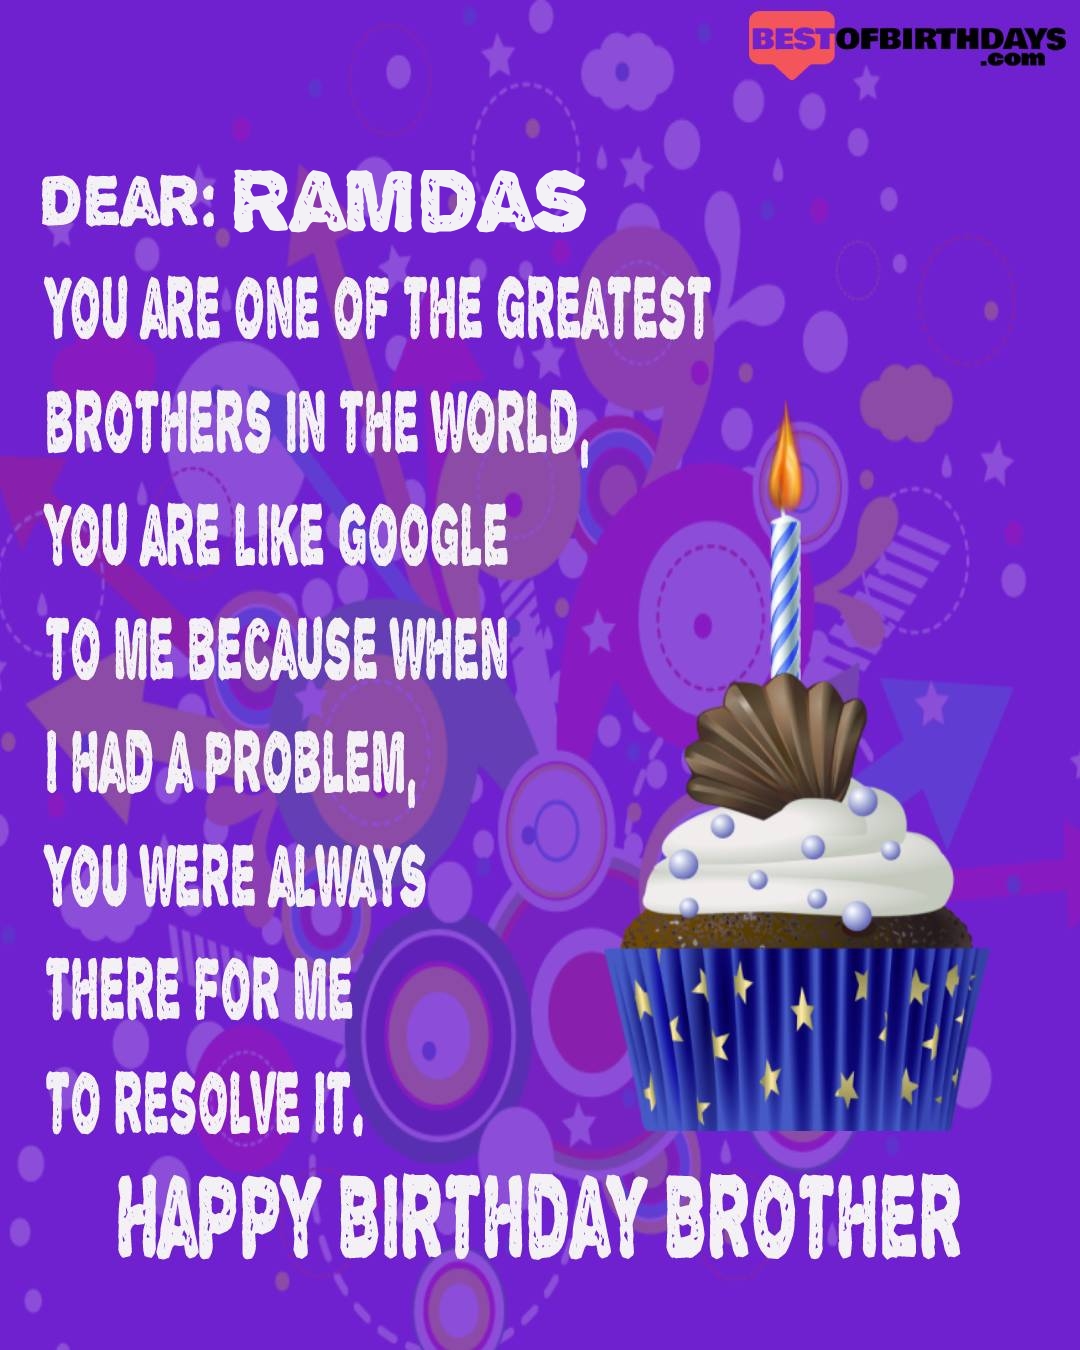 Happy birthday ramdas bhai brother bro